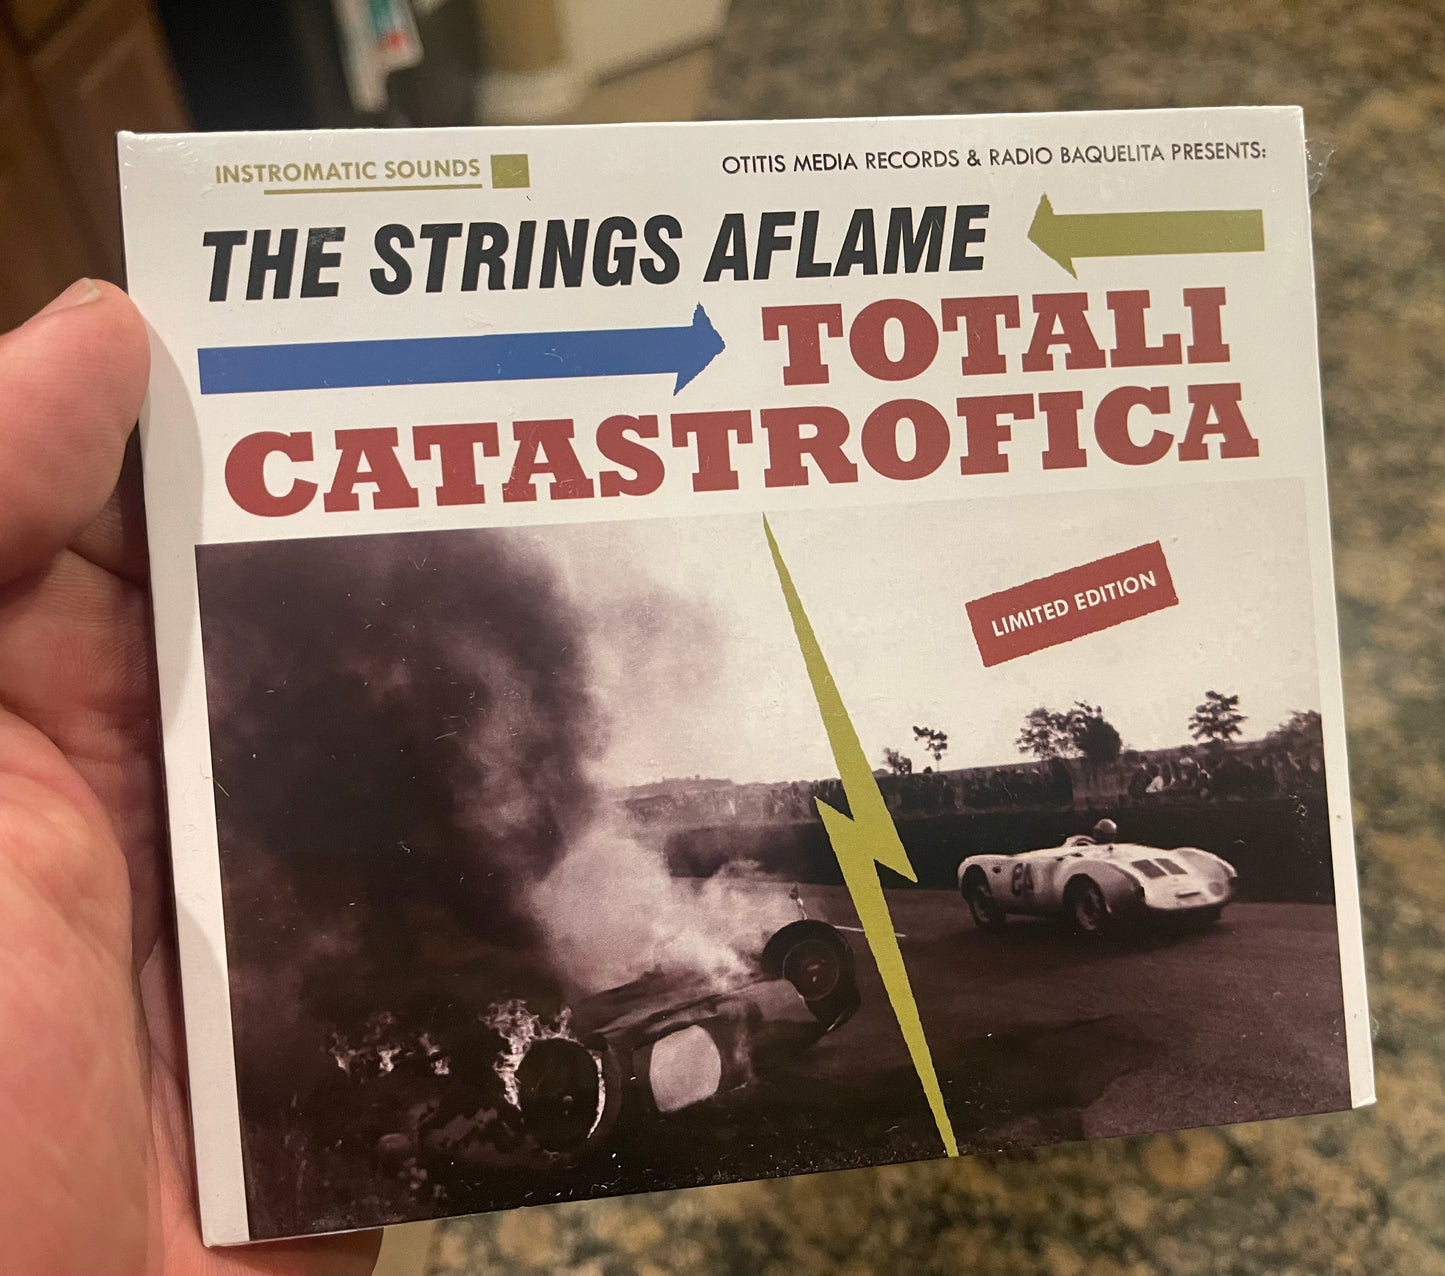 OMR-090 The Strings Aflame “Totali Catastrofica” CD/Vinyl